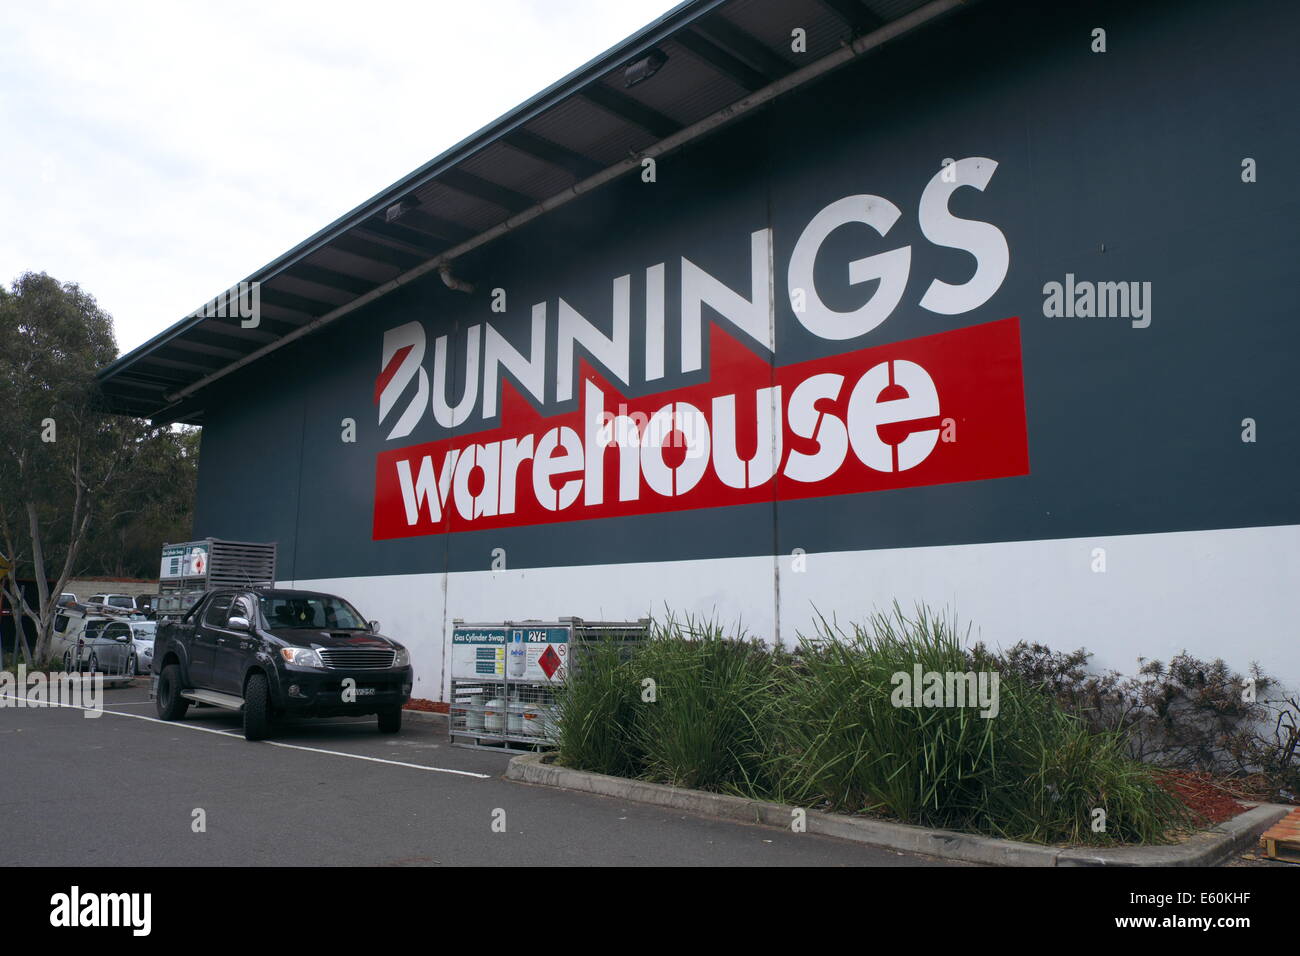 Bunnings è un nazionale rivenditore DIY di proprietà di wesfarmers, essa vende attrezzi, legname, attrezzature per costruttori e proprietari di casa di Sydney Foto Stock